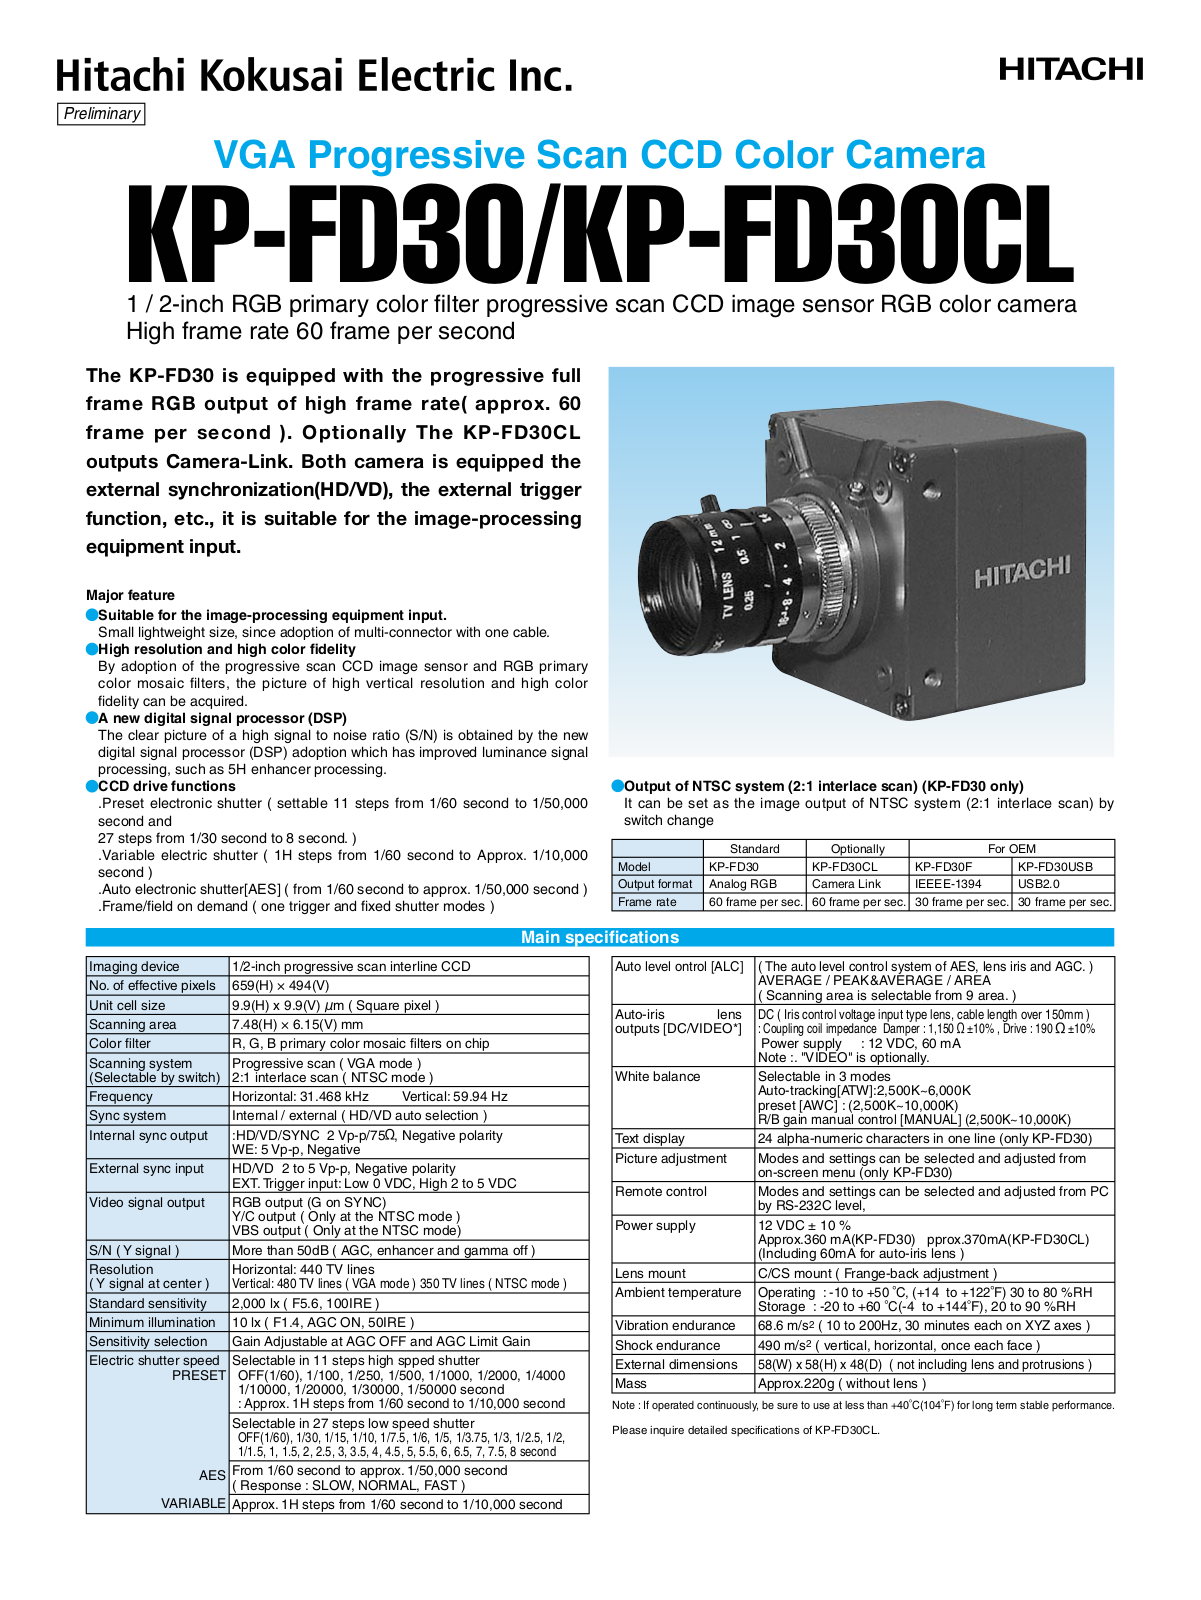 Hitachi KP-FD30, KP-FD30CL User Manual